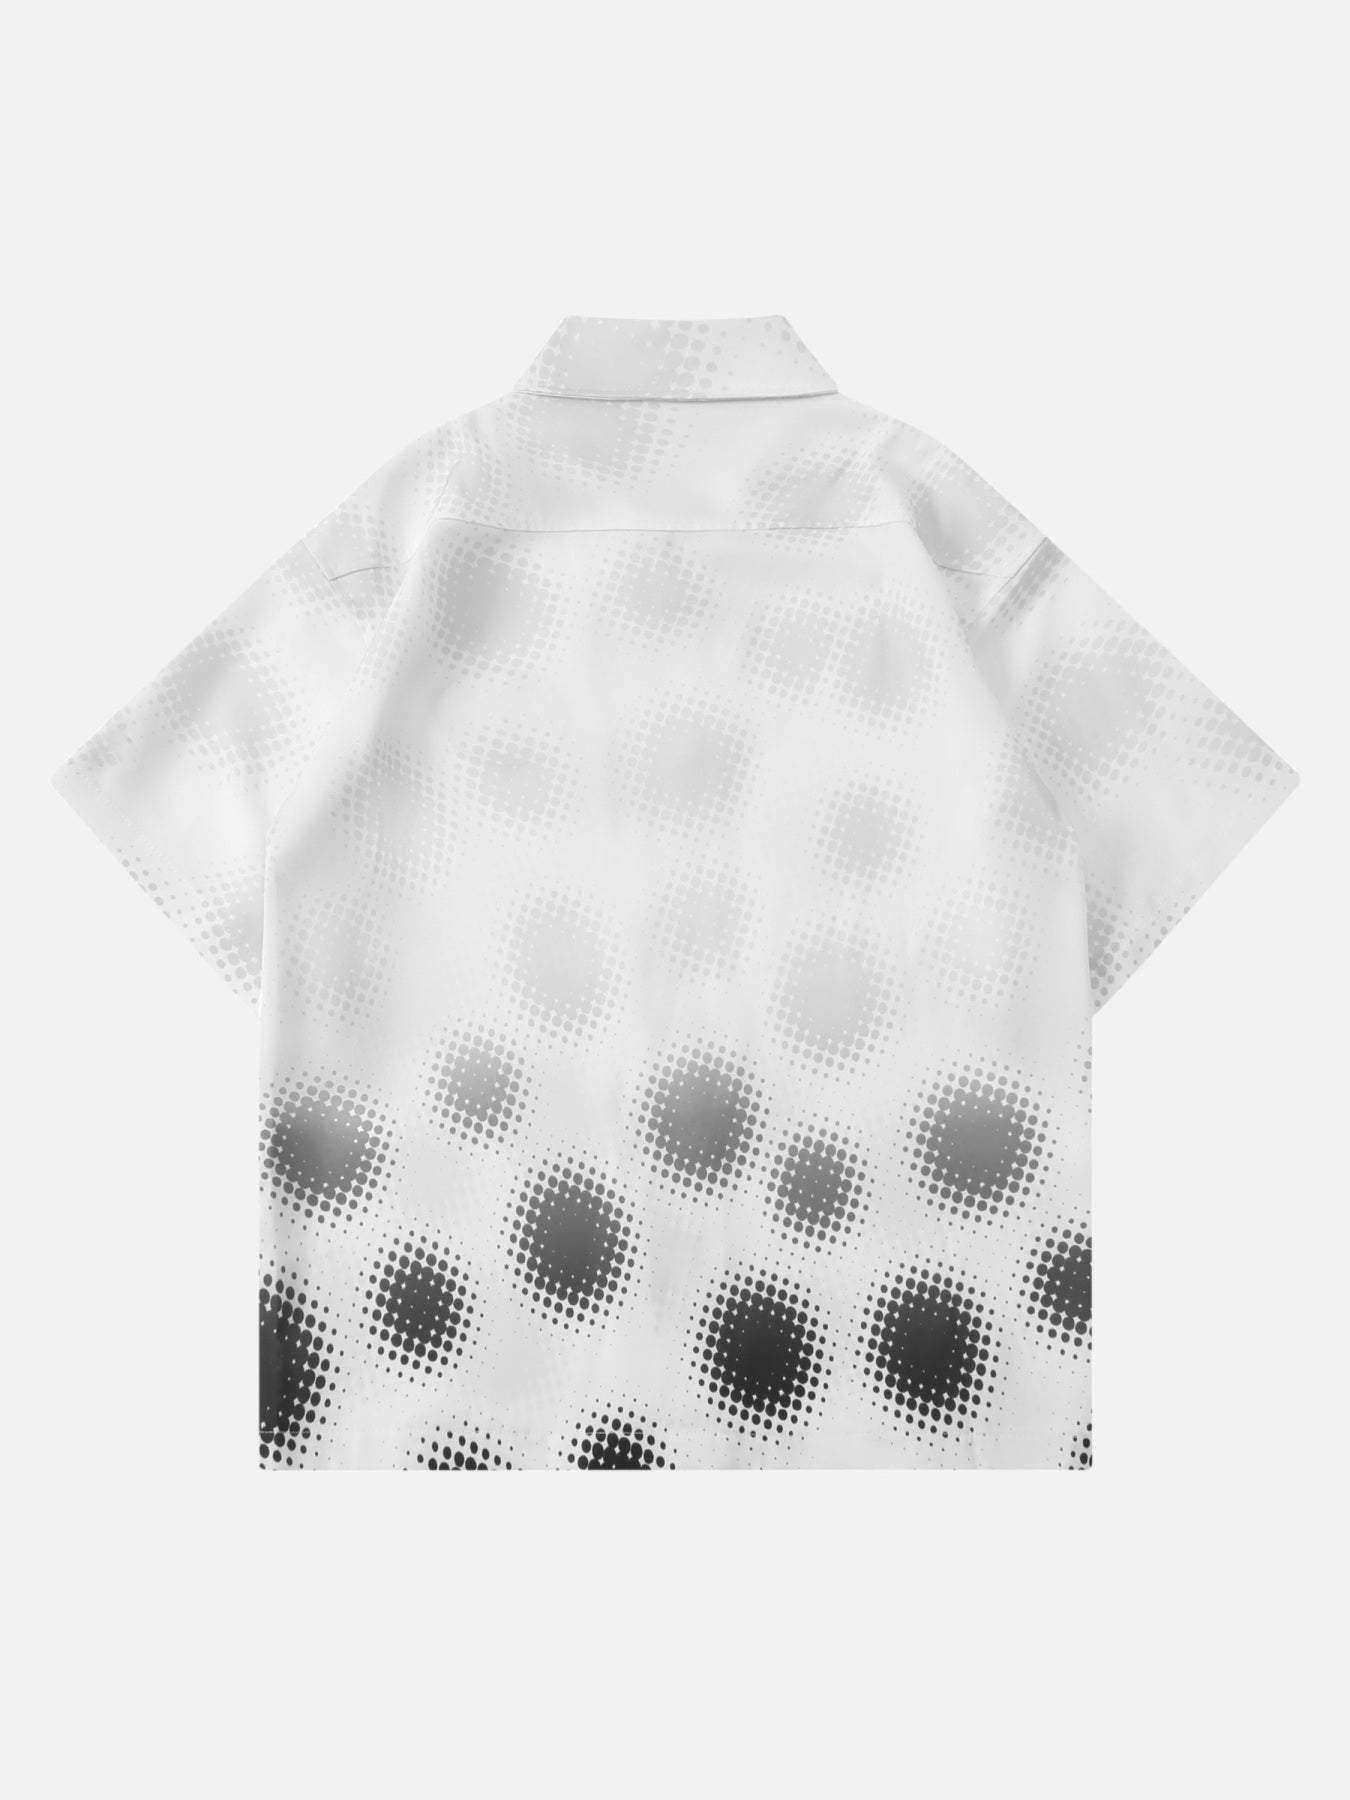 Thesupermade Polka Dot Short Sleeve Shirt